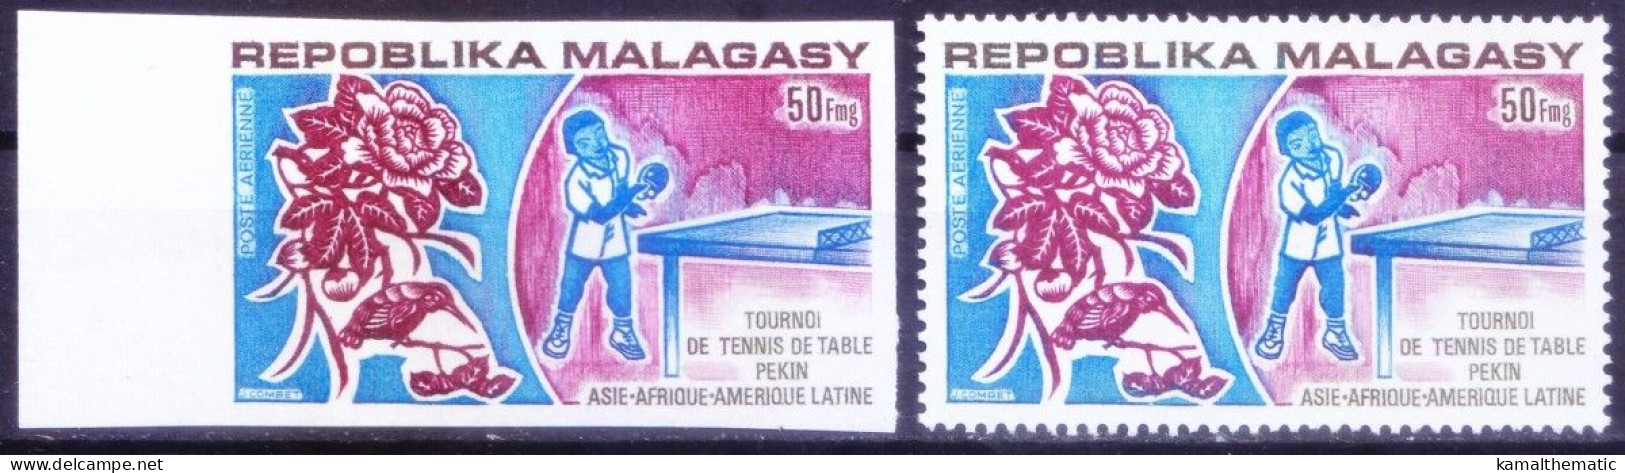 Madagascar Perf+Imperf 1974 MNH, Table Tennis, Sports, Hummingbird, Hibiscus Flower - Tennis Tavolo